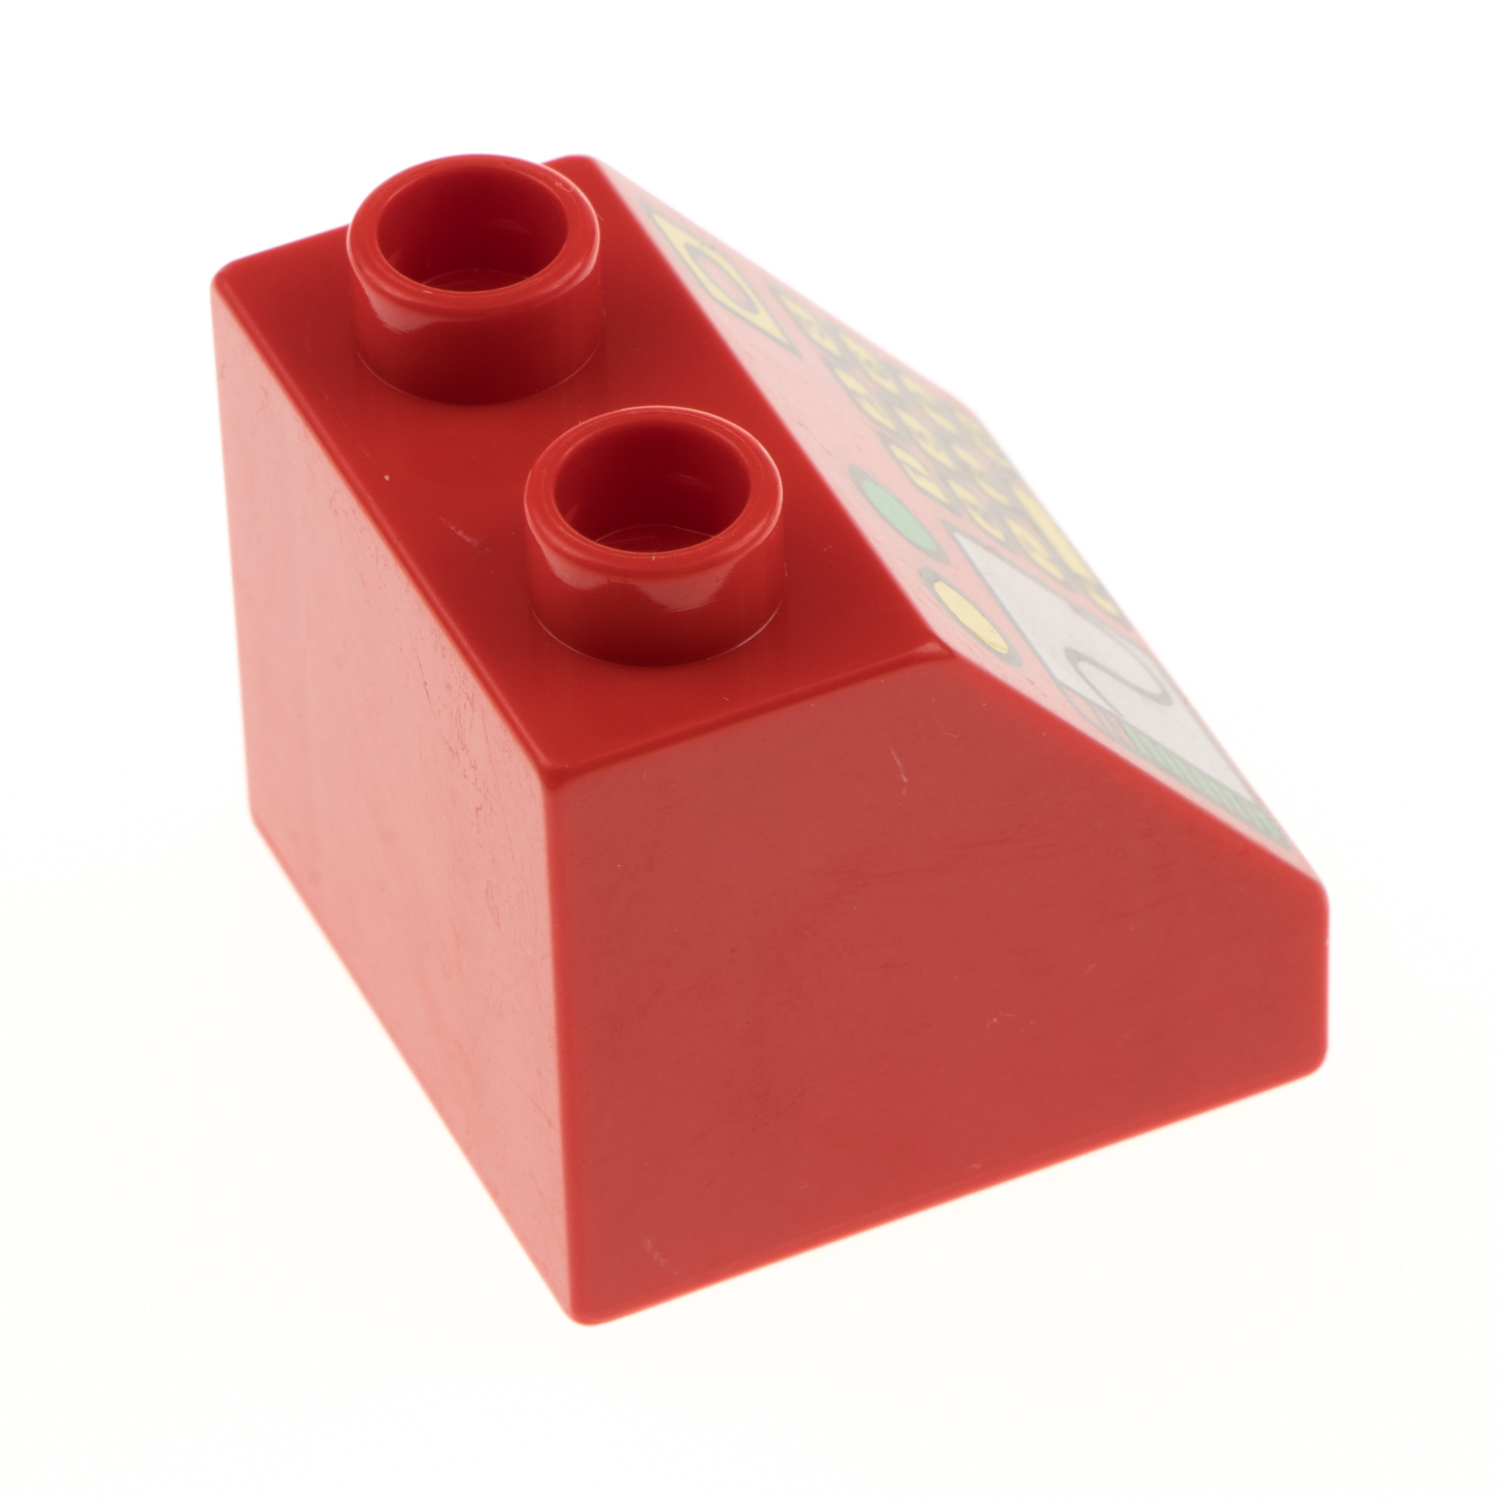 1x Lego Duplo Dach Stein 2x2x1 rot bedruckt Kontroll Anzeige Joystick 6474pb20